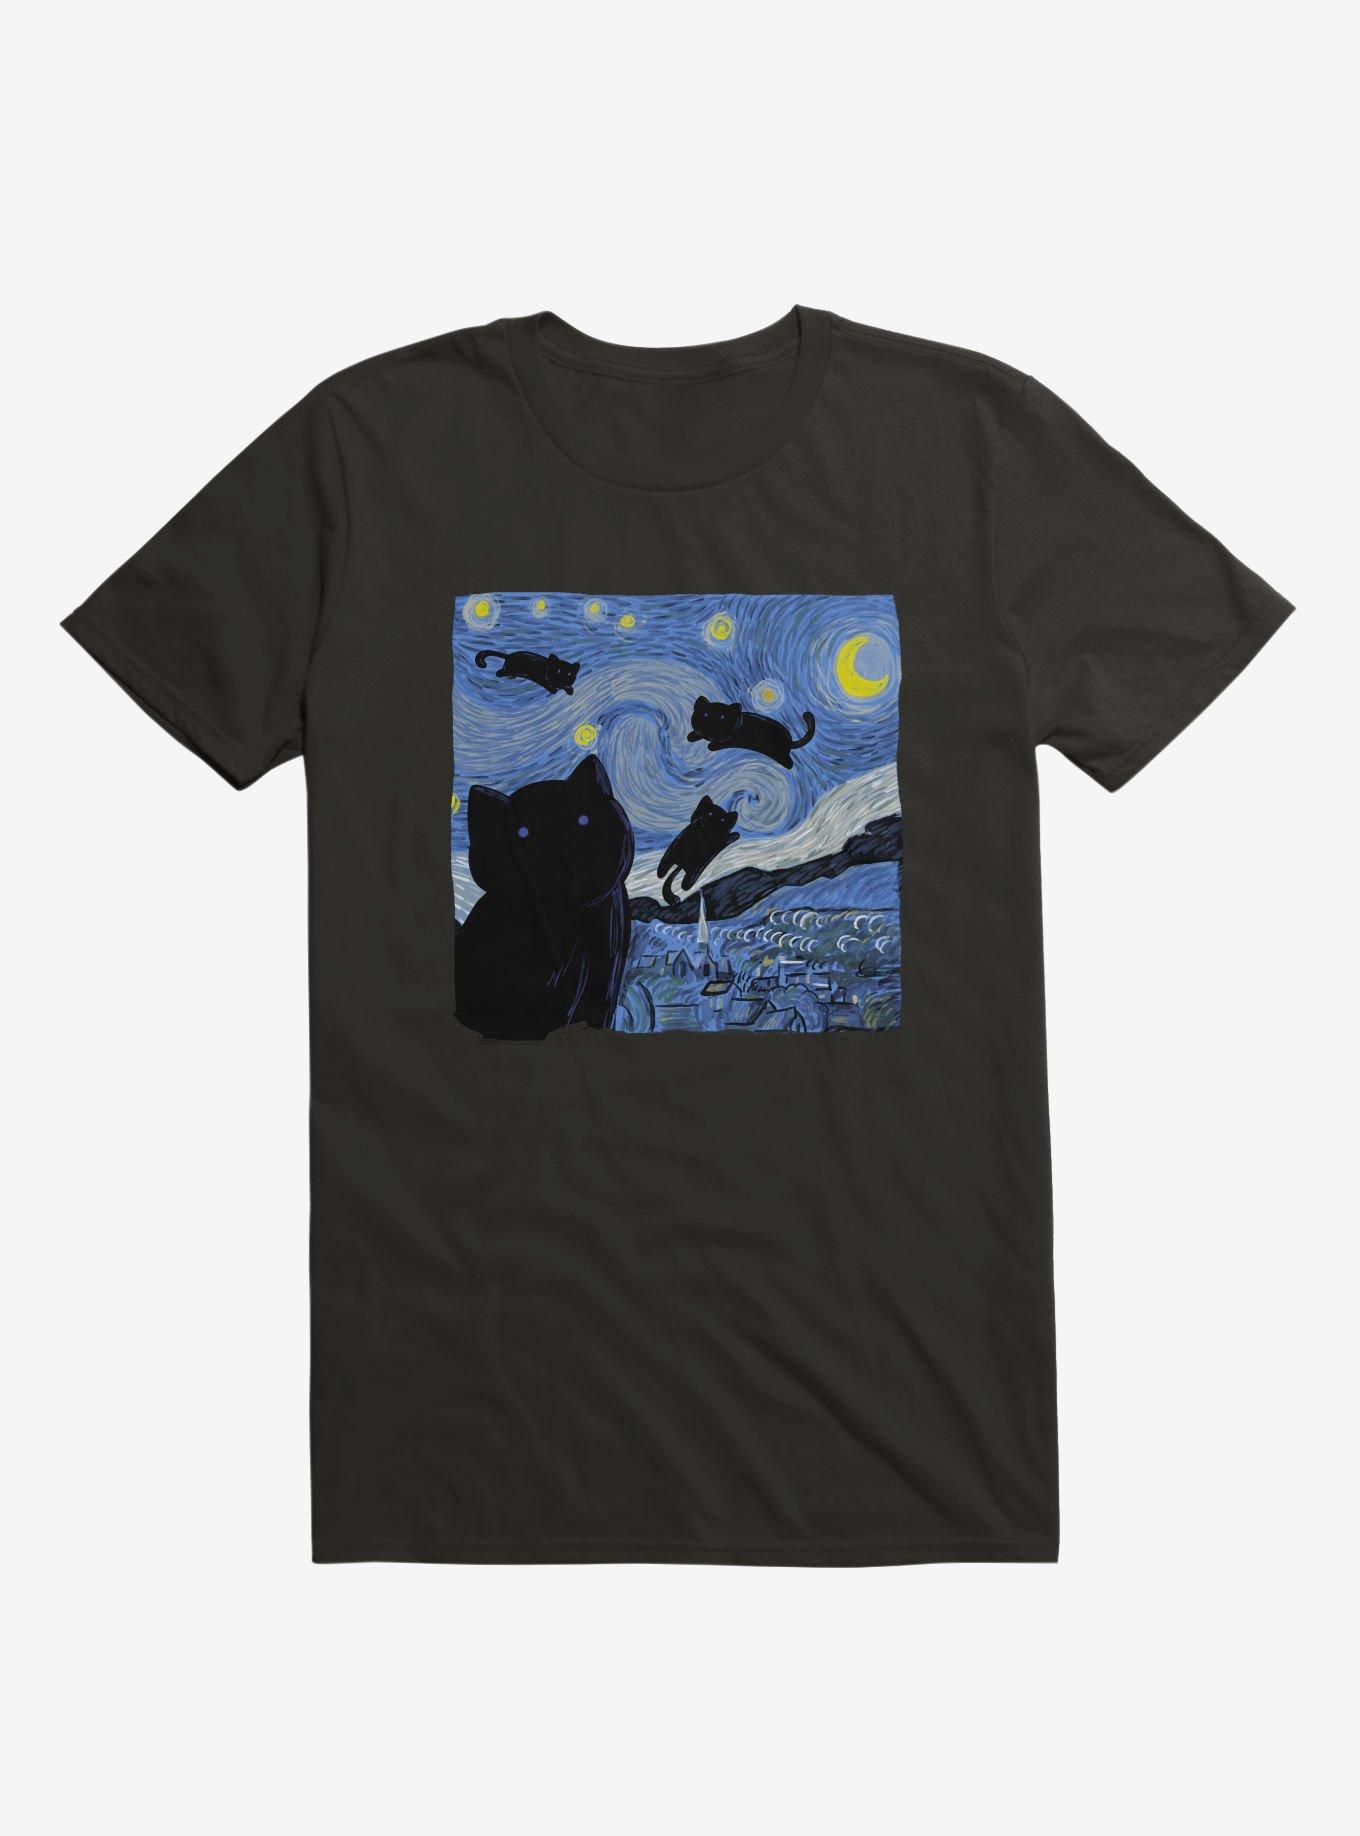 The Starry Cat Night T-Shirt